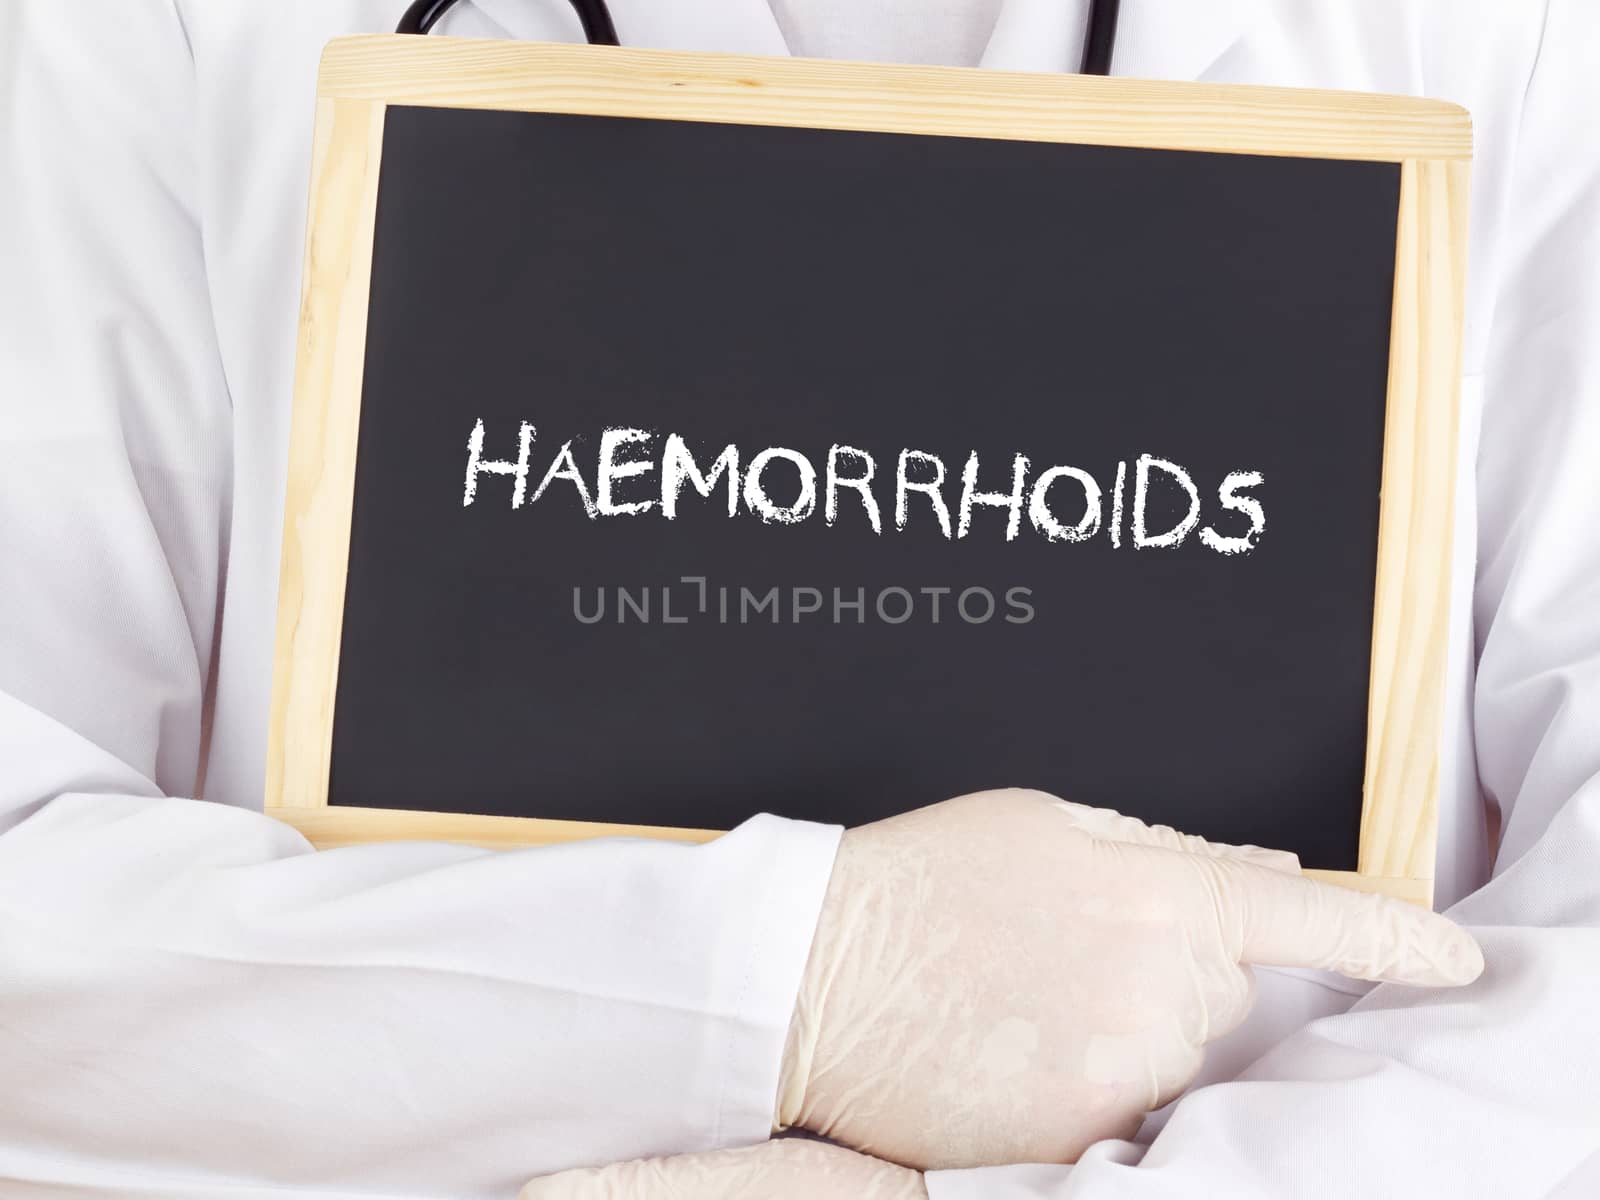 Doctor shows information on blackboard: haemorrhoids